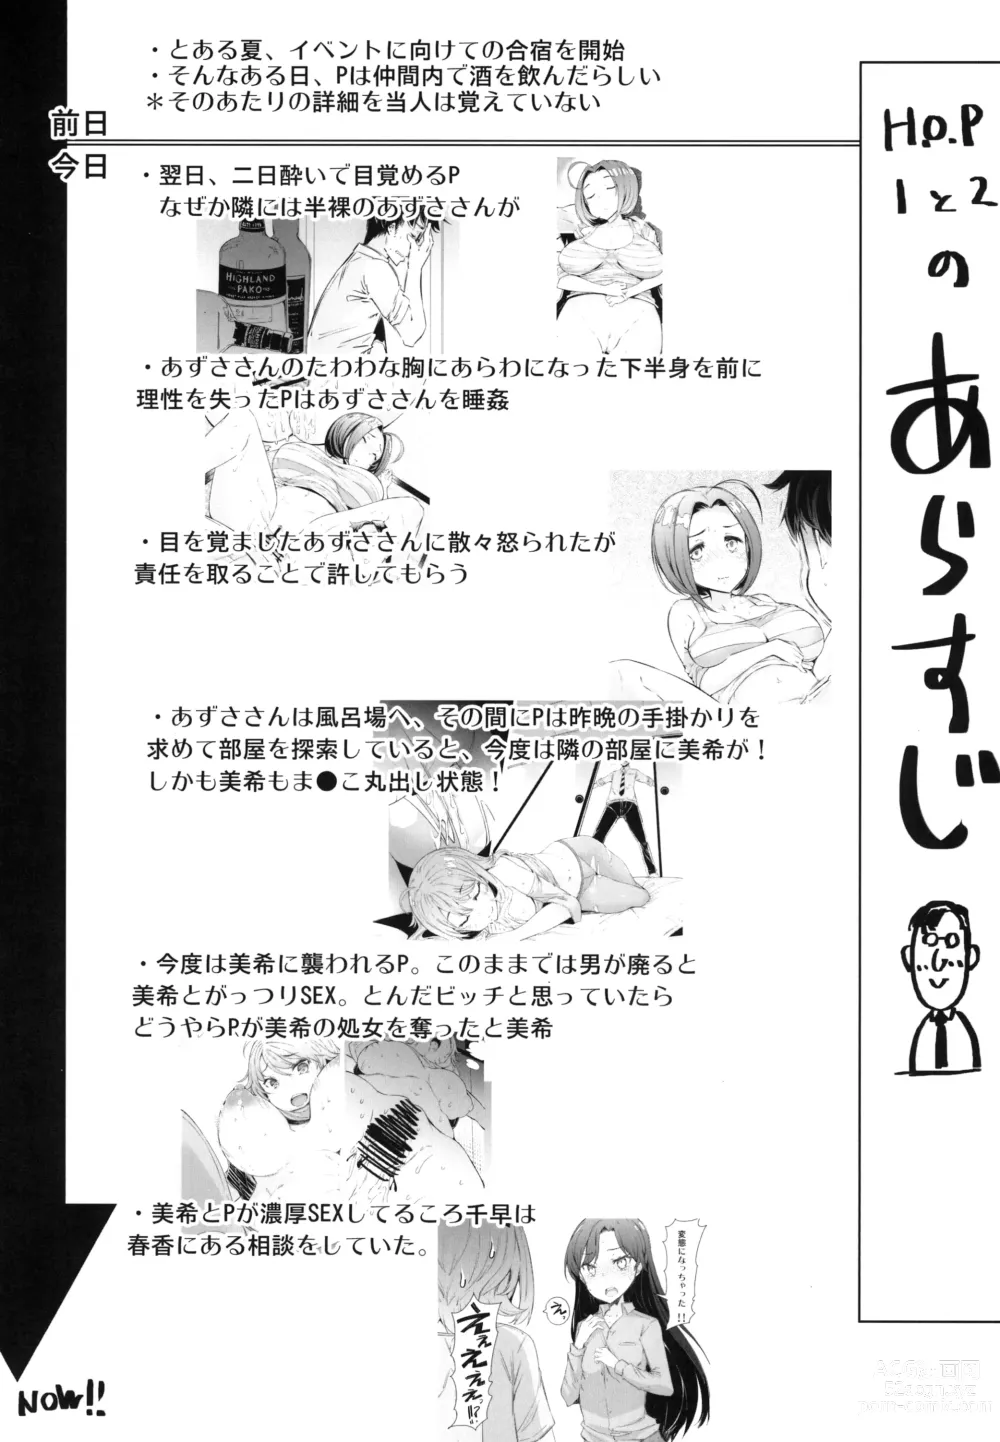 Page 2 of doujinshi HOP vol. 03 Final Episode